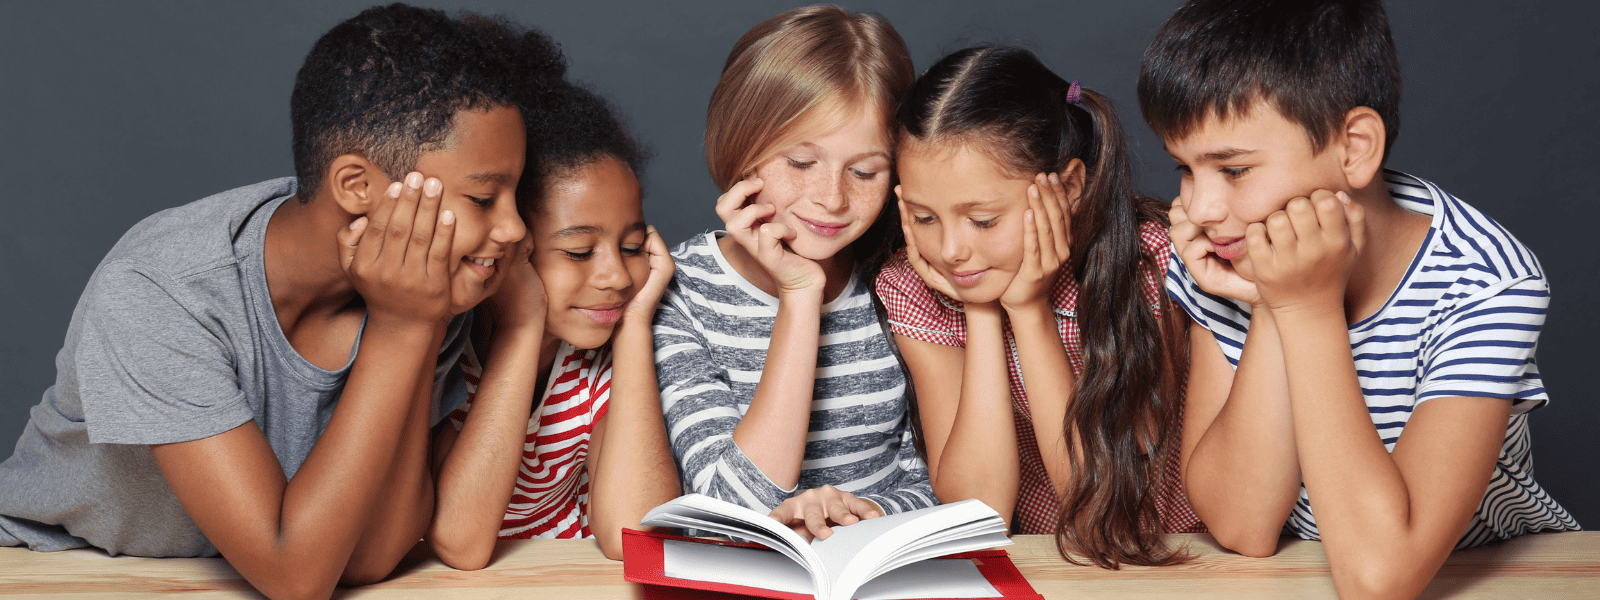 Tips to Improve Reading Fluency